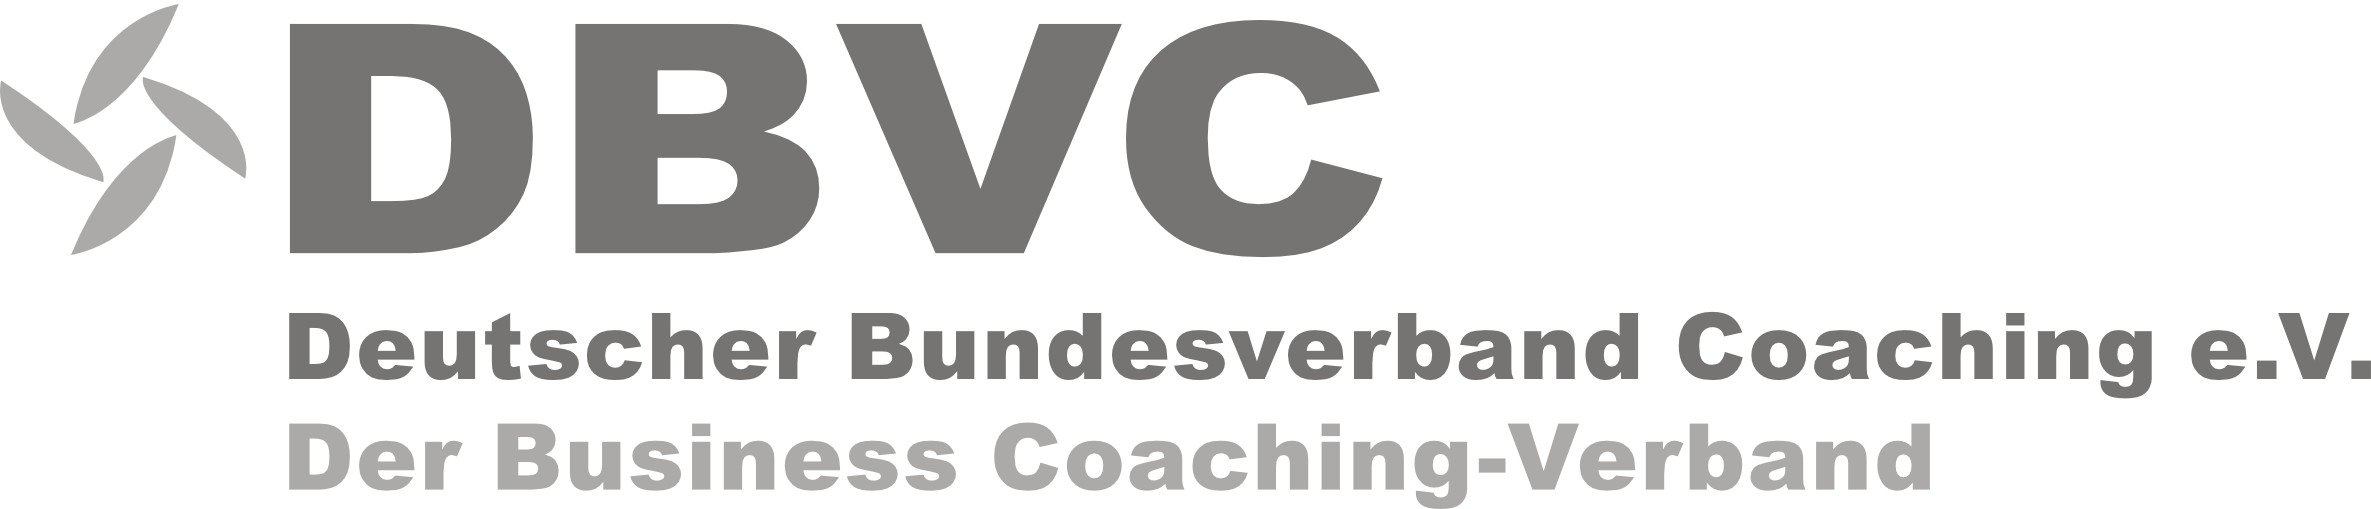 Deutscher Bundesverband Coaching – Business Coaching